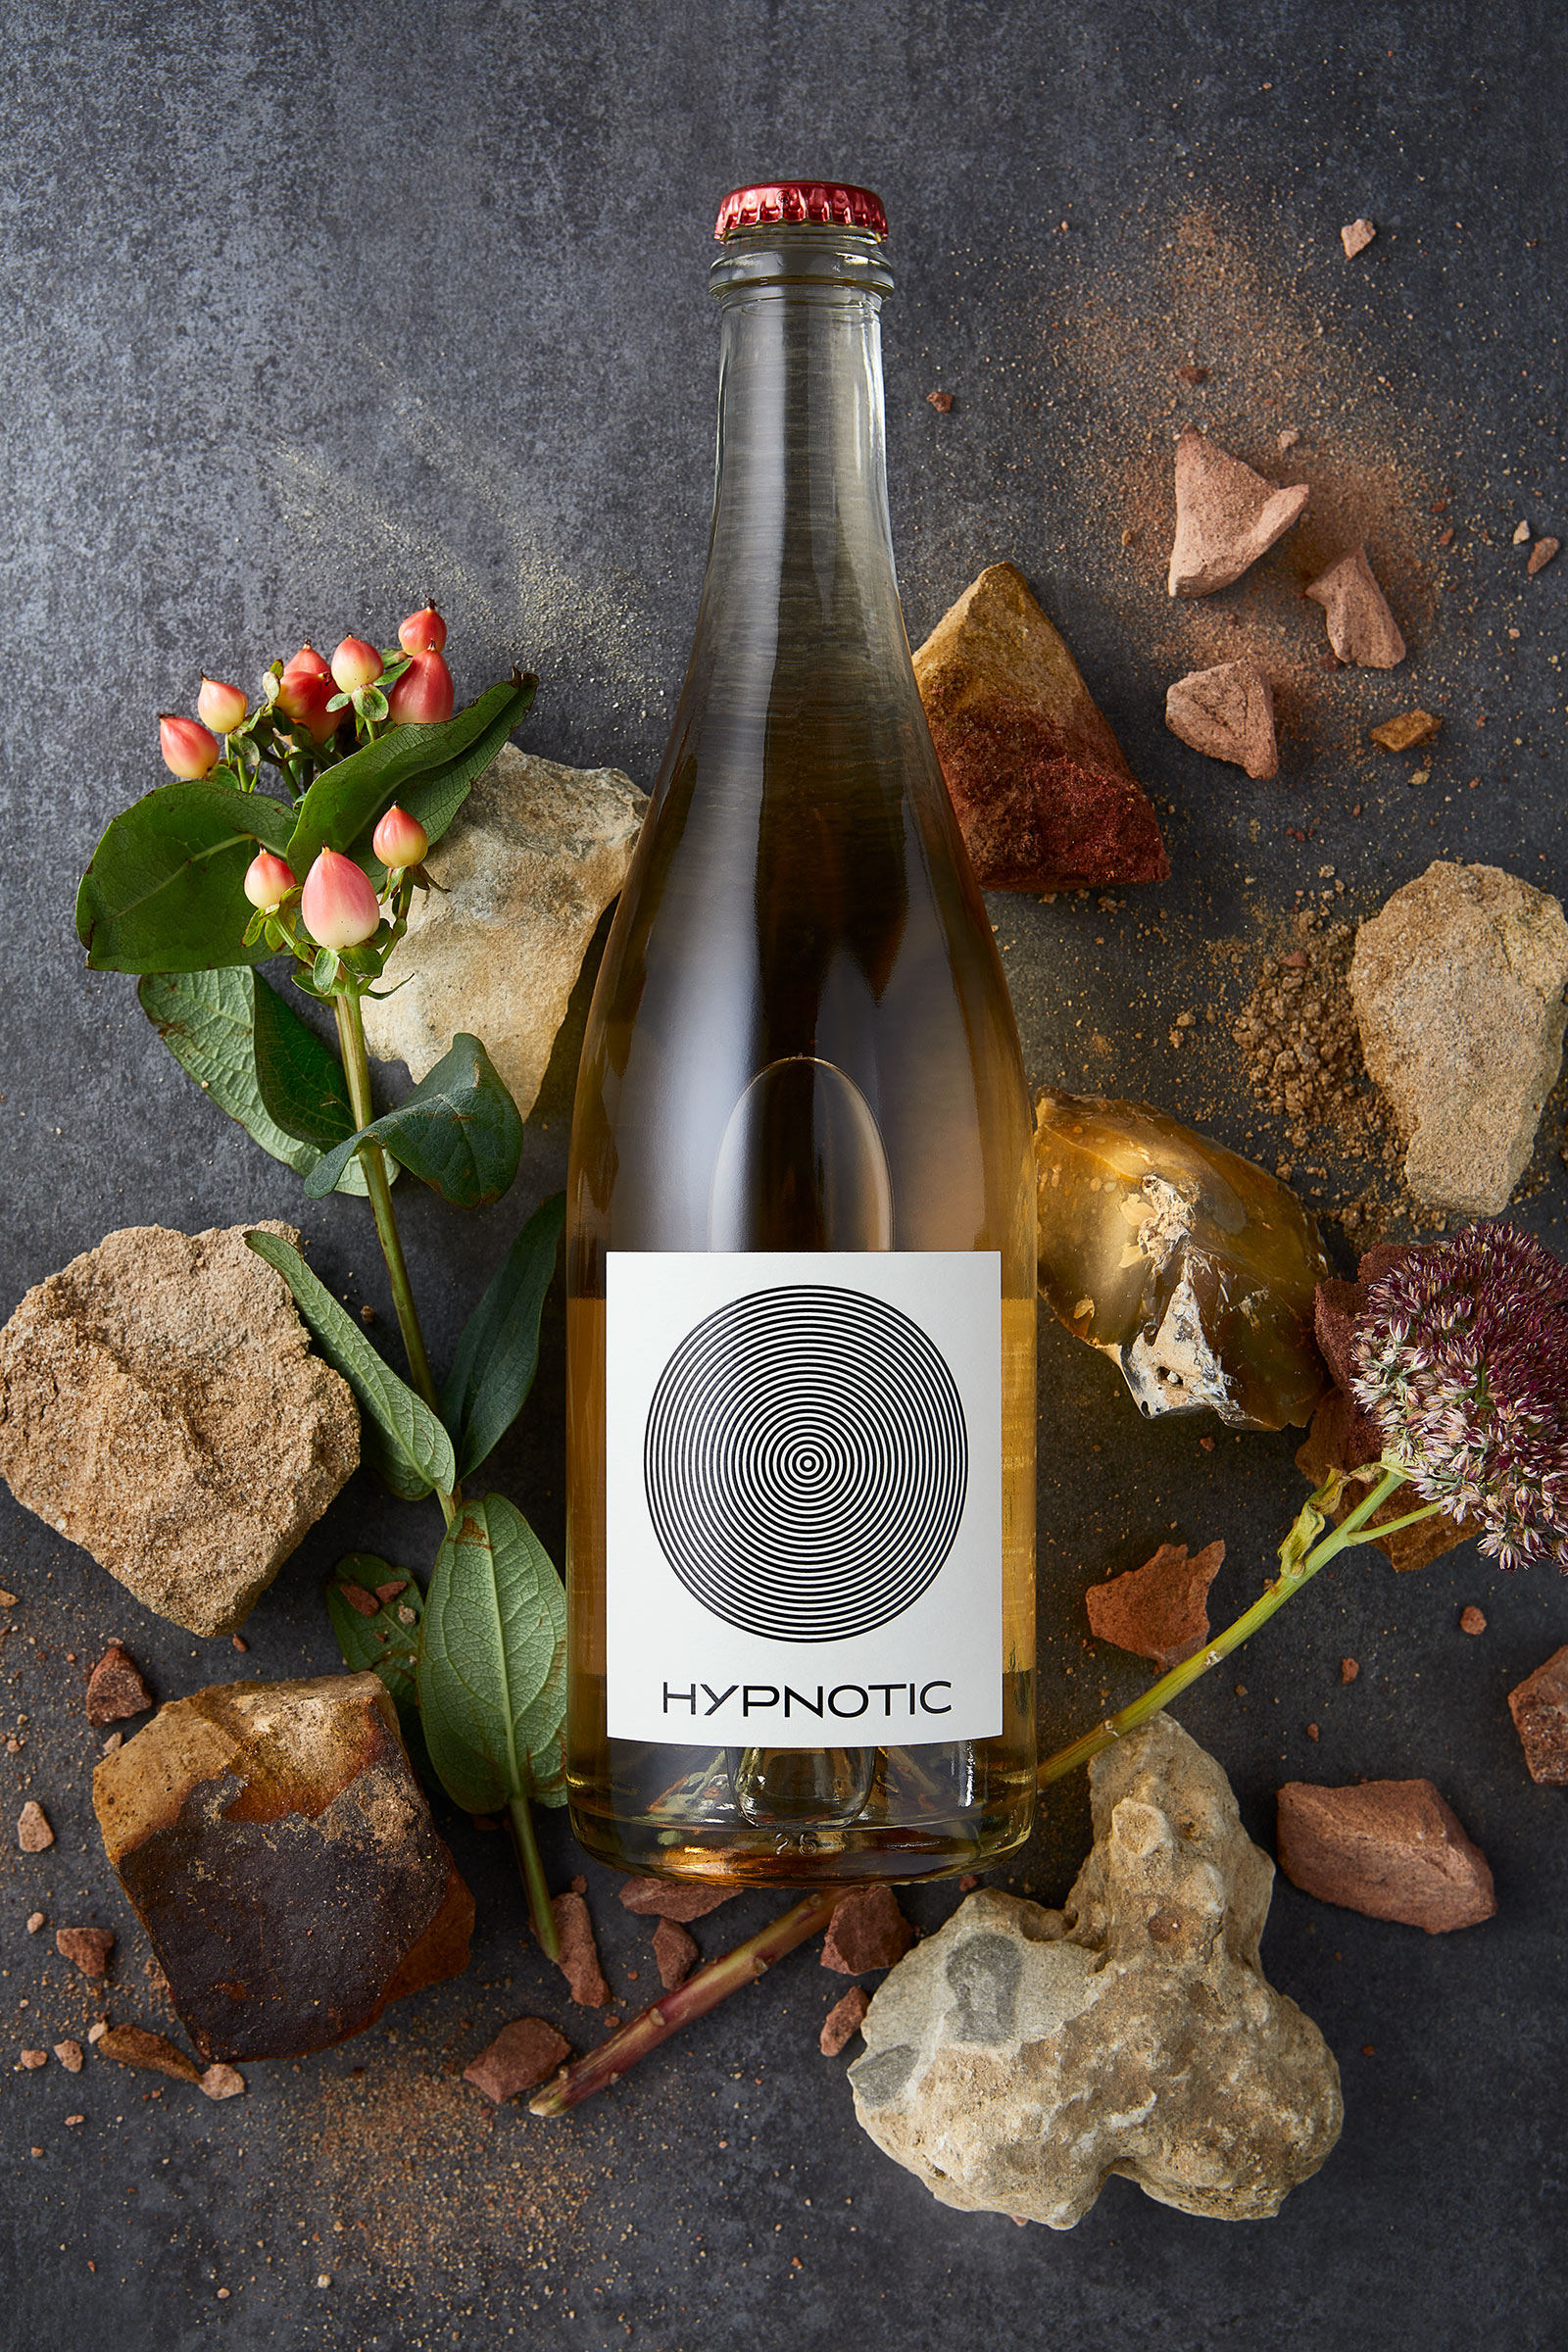 Hypnotic Natural Wine for De Burgh Wine Merchants, Alastair Ferrier, Edinburgh food and drink photographer.